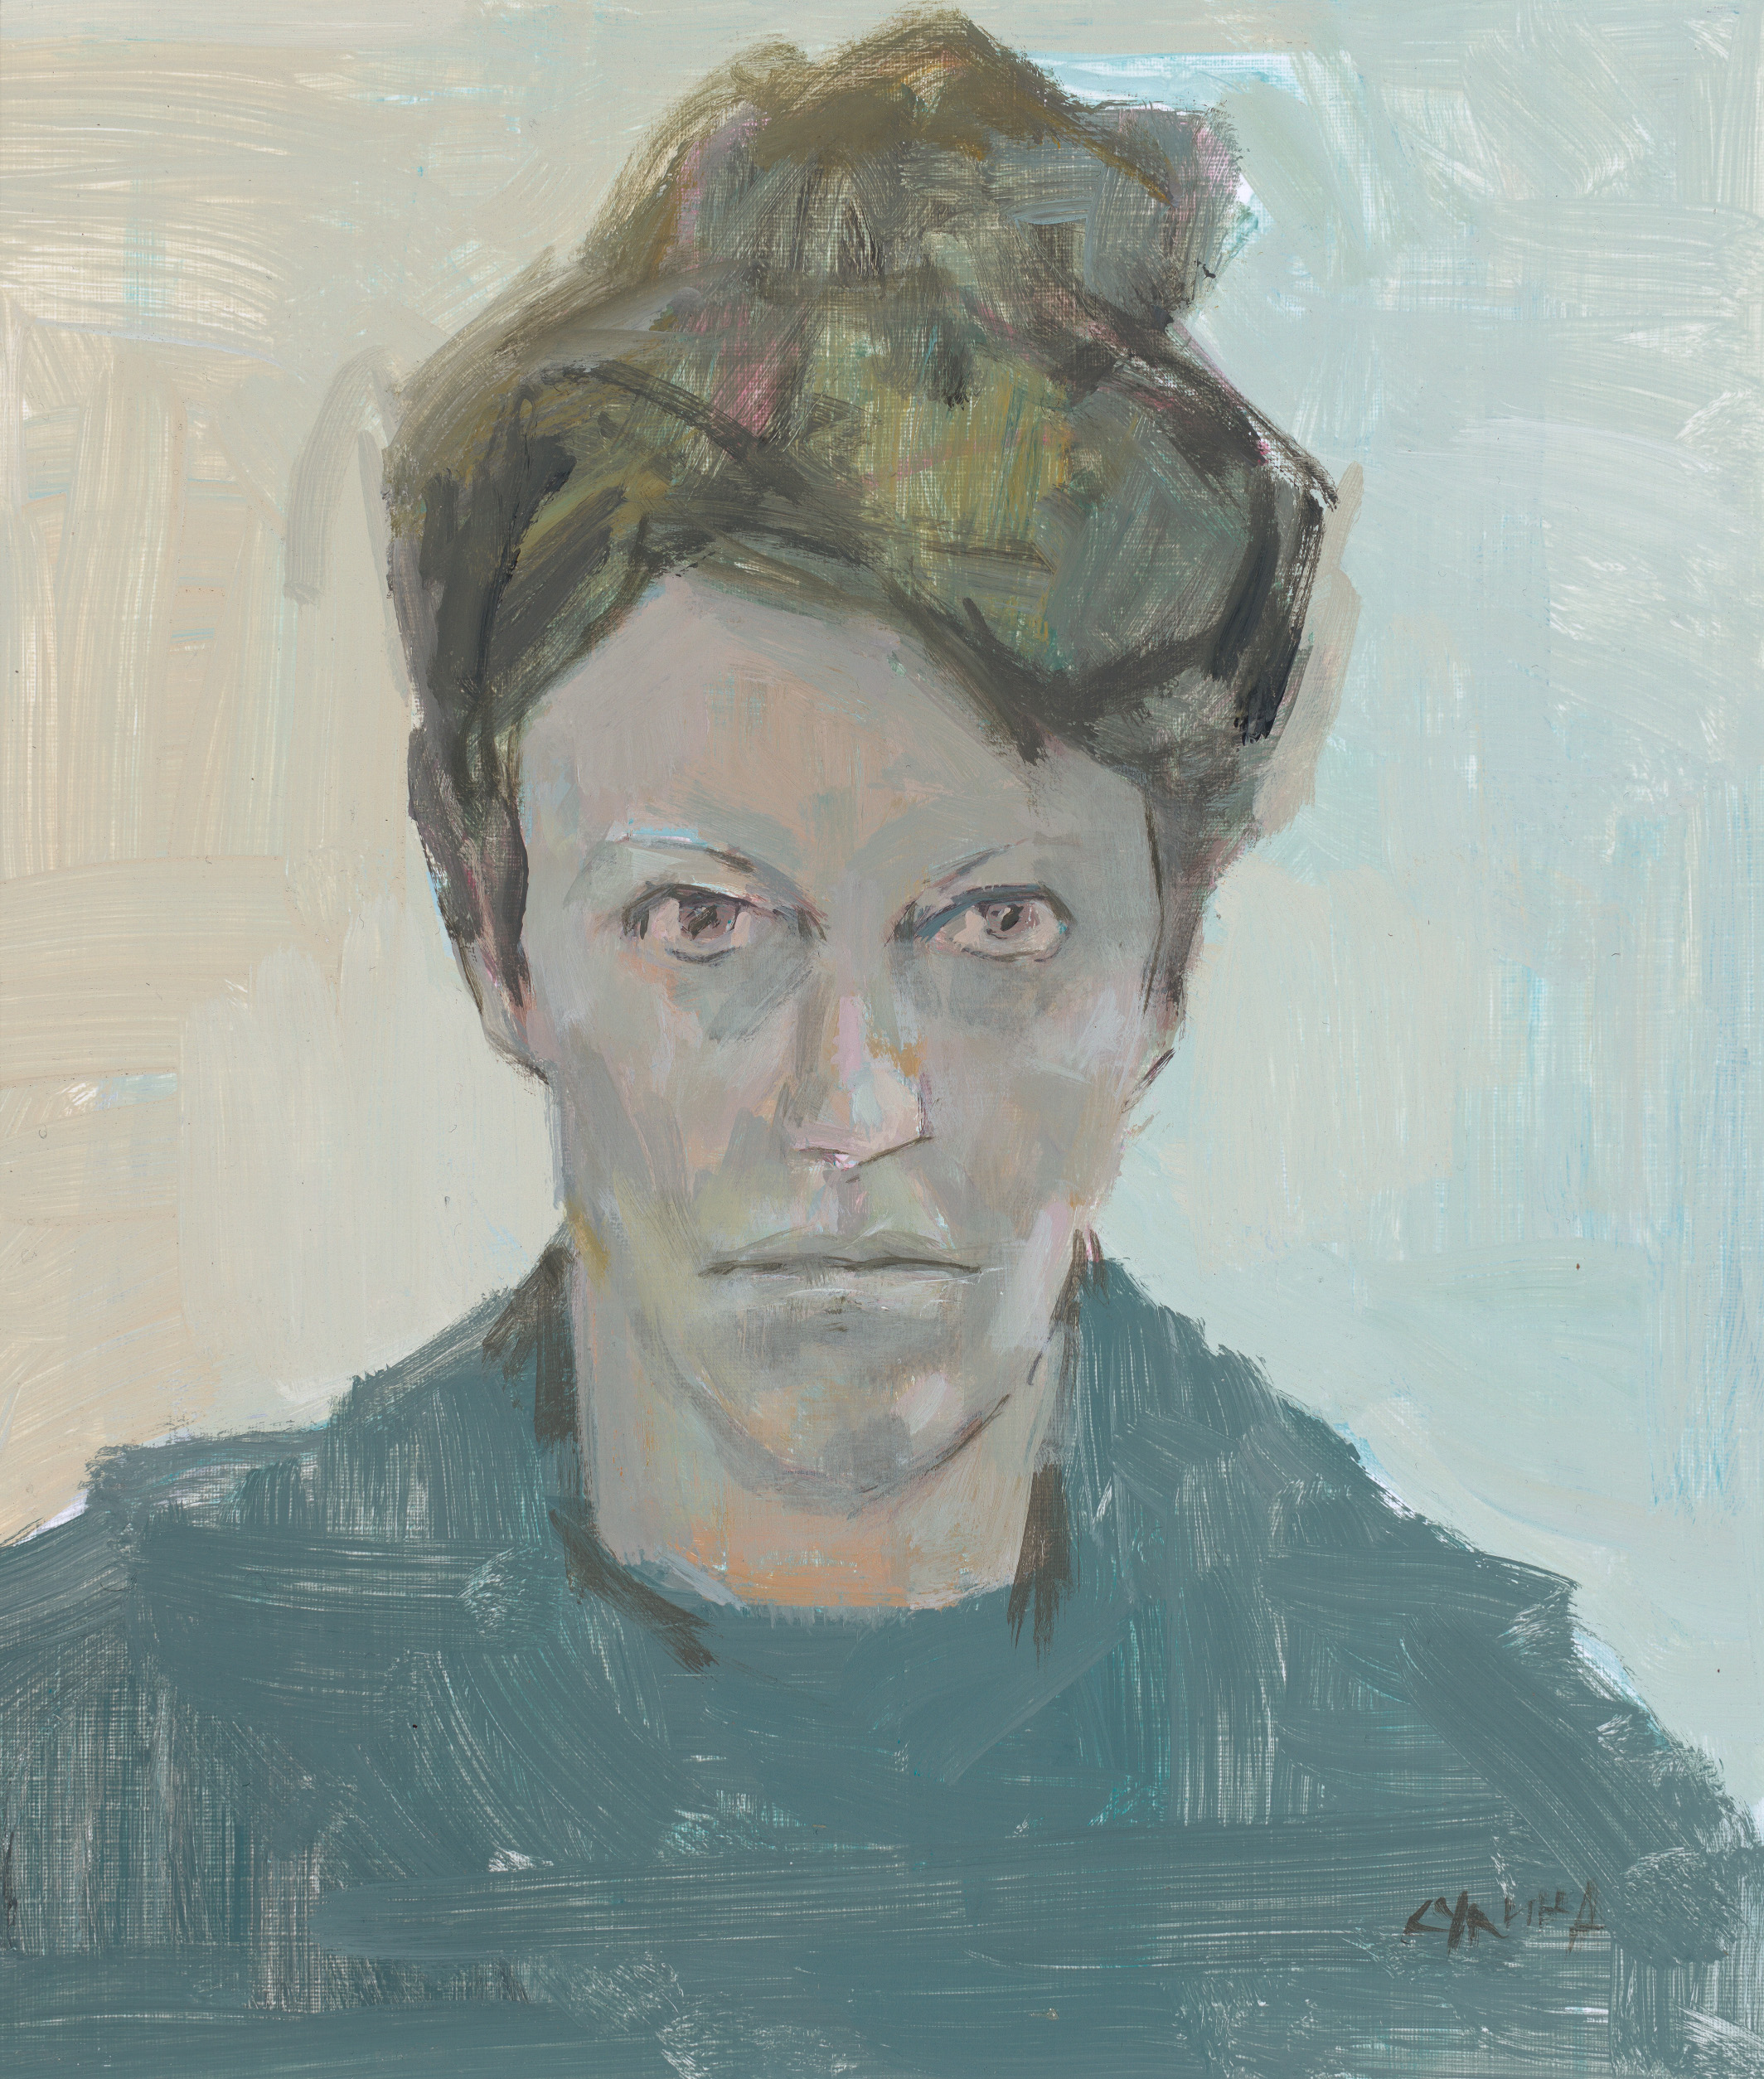 Dagmar Cyrulla 'Self portrait study in blue' oil on paper on board 31 x 26cm $4,000